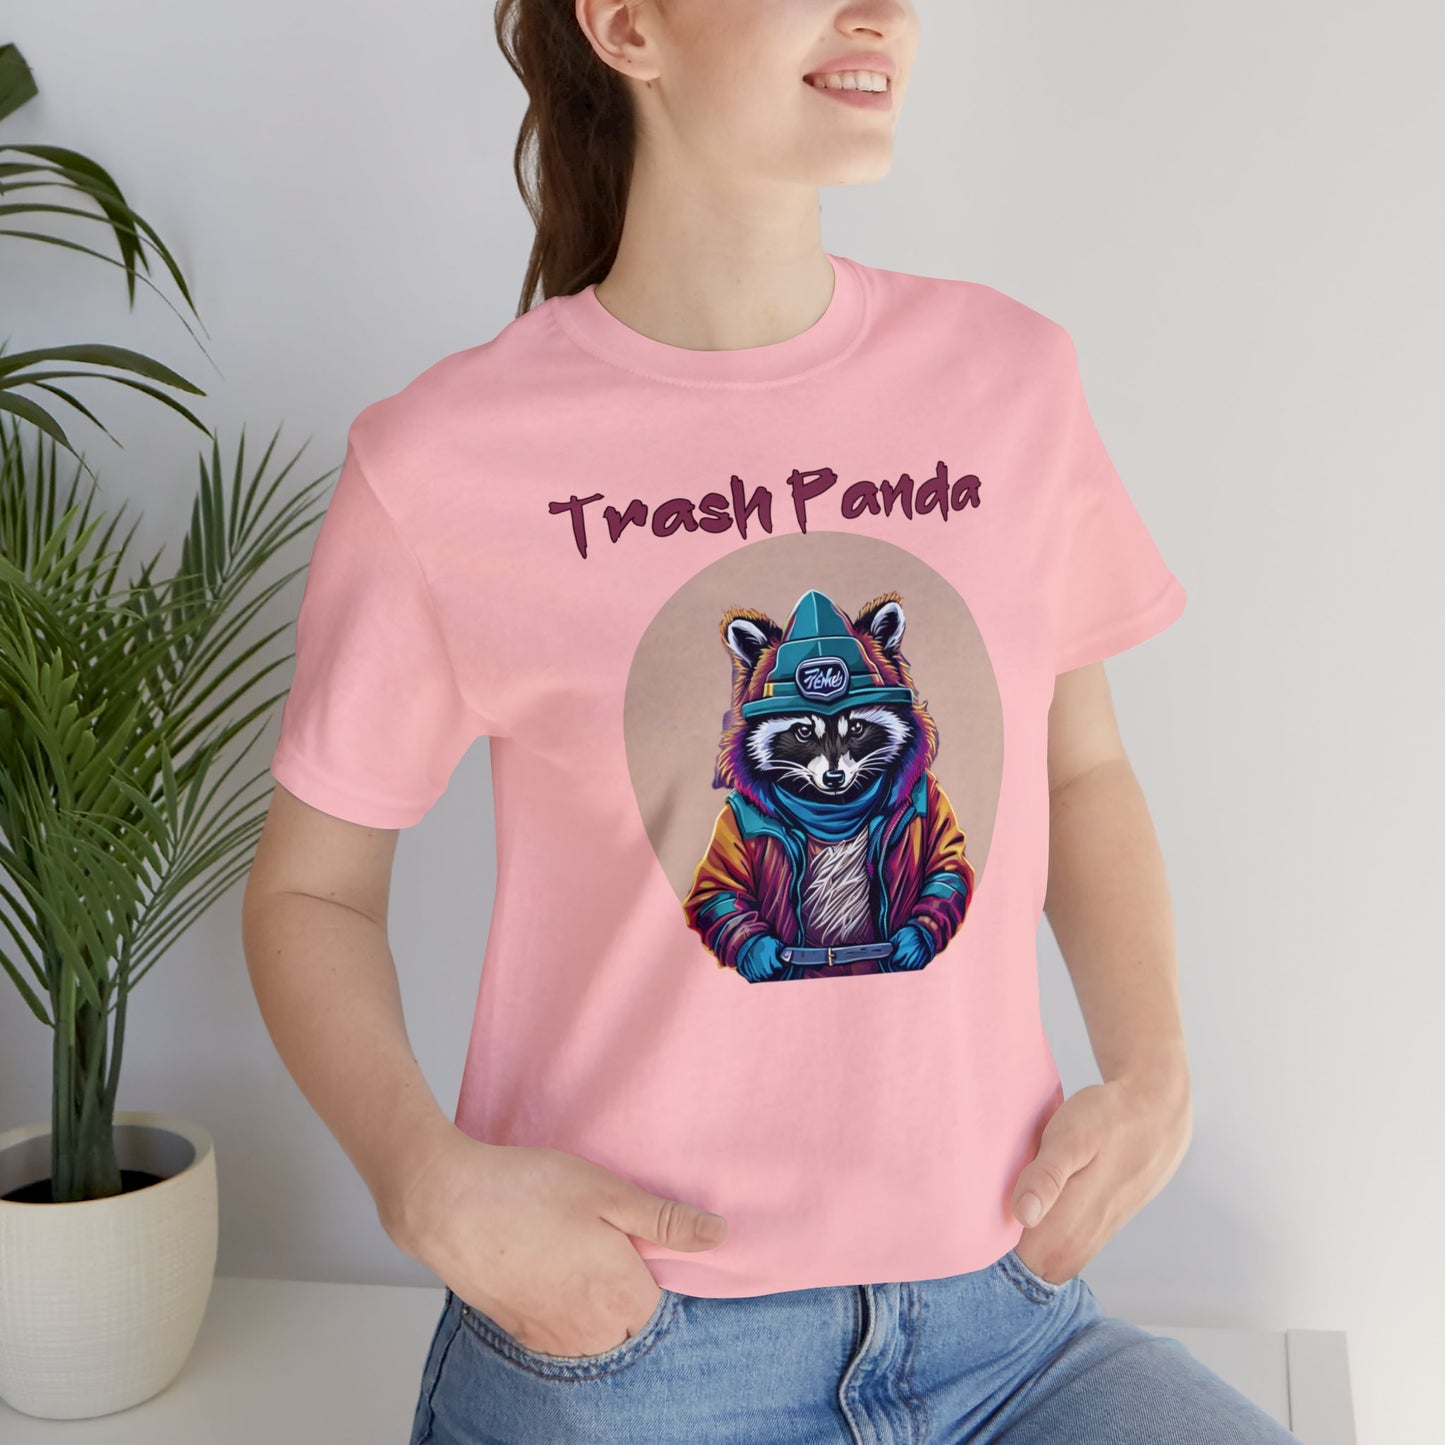 Trash Panda | Raccoon | Anthropomorphic| Funny Gift | Cartoon | Unisex | Men's | Women's | Tee | T-Shirt